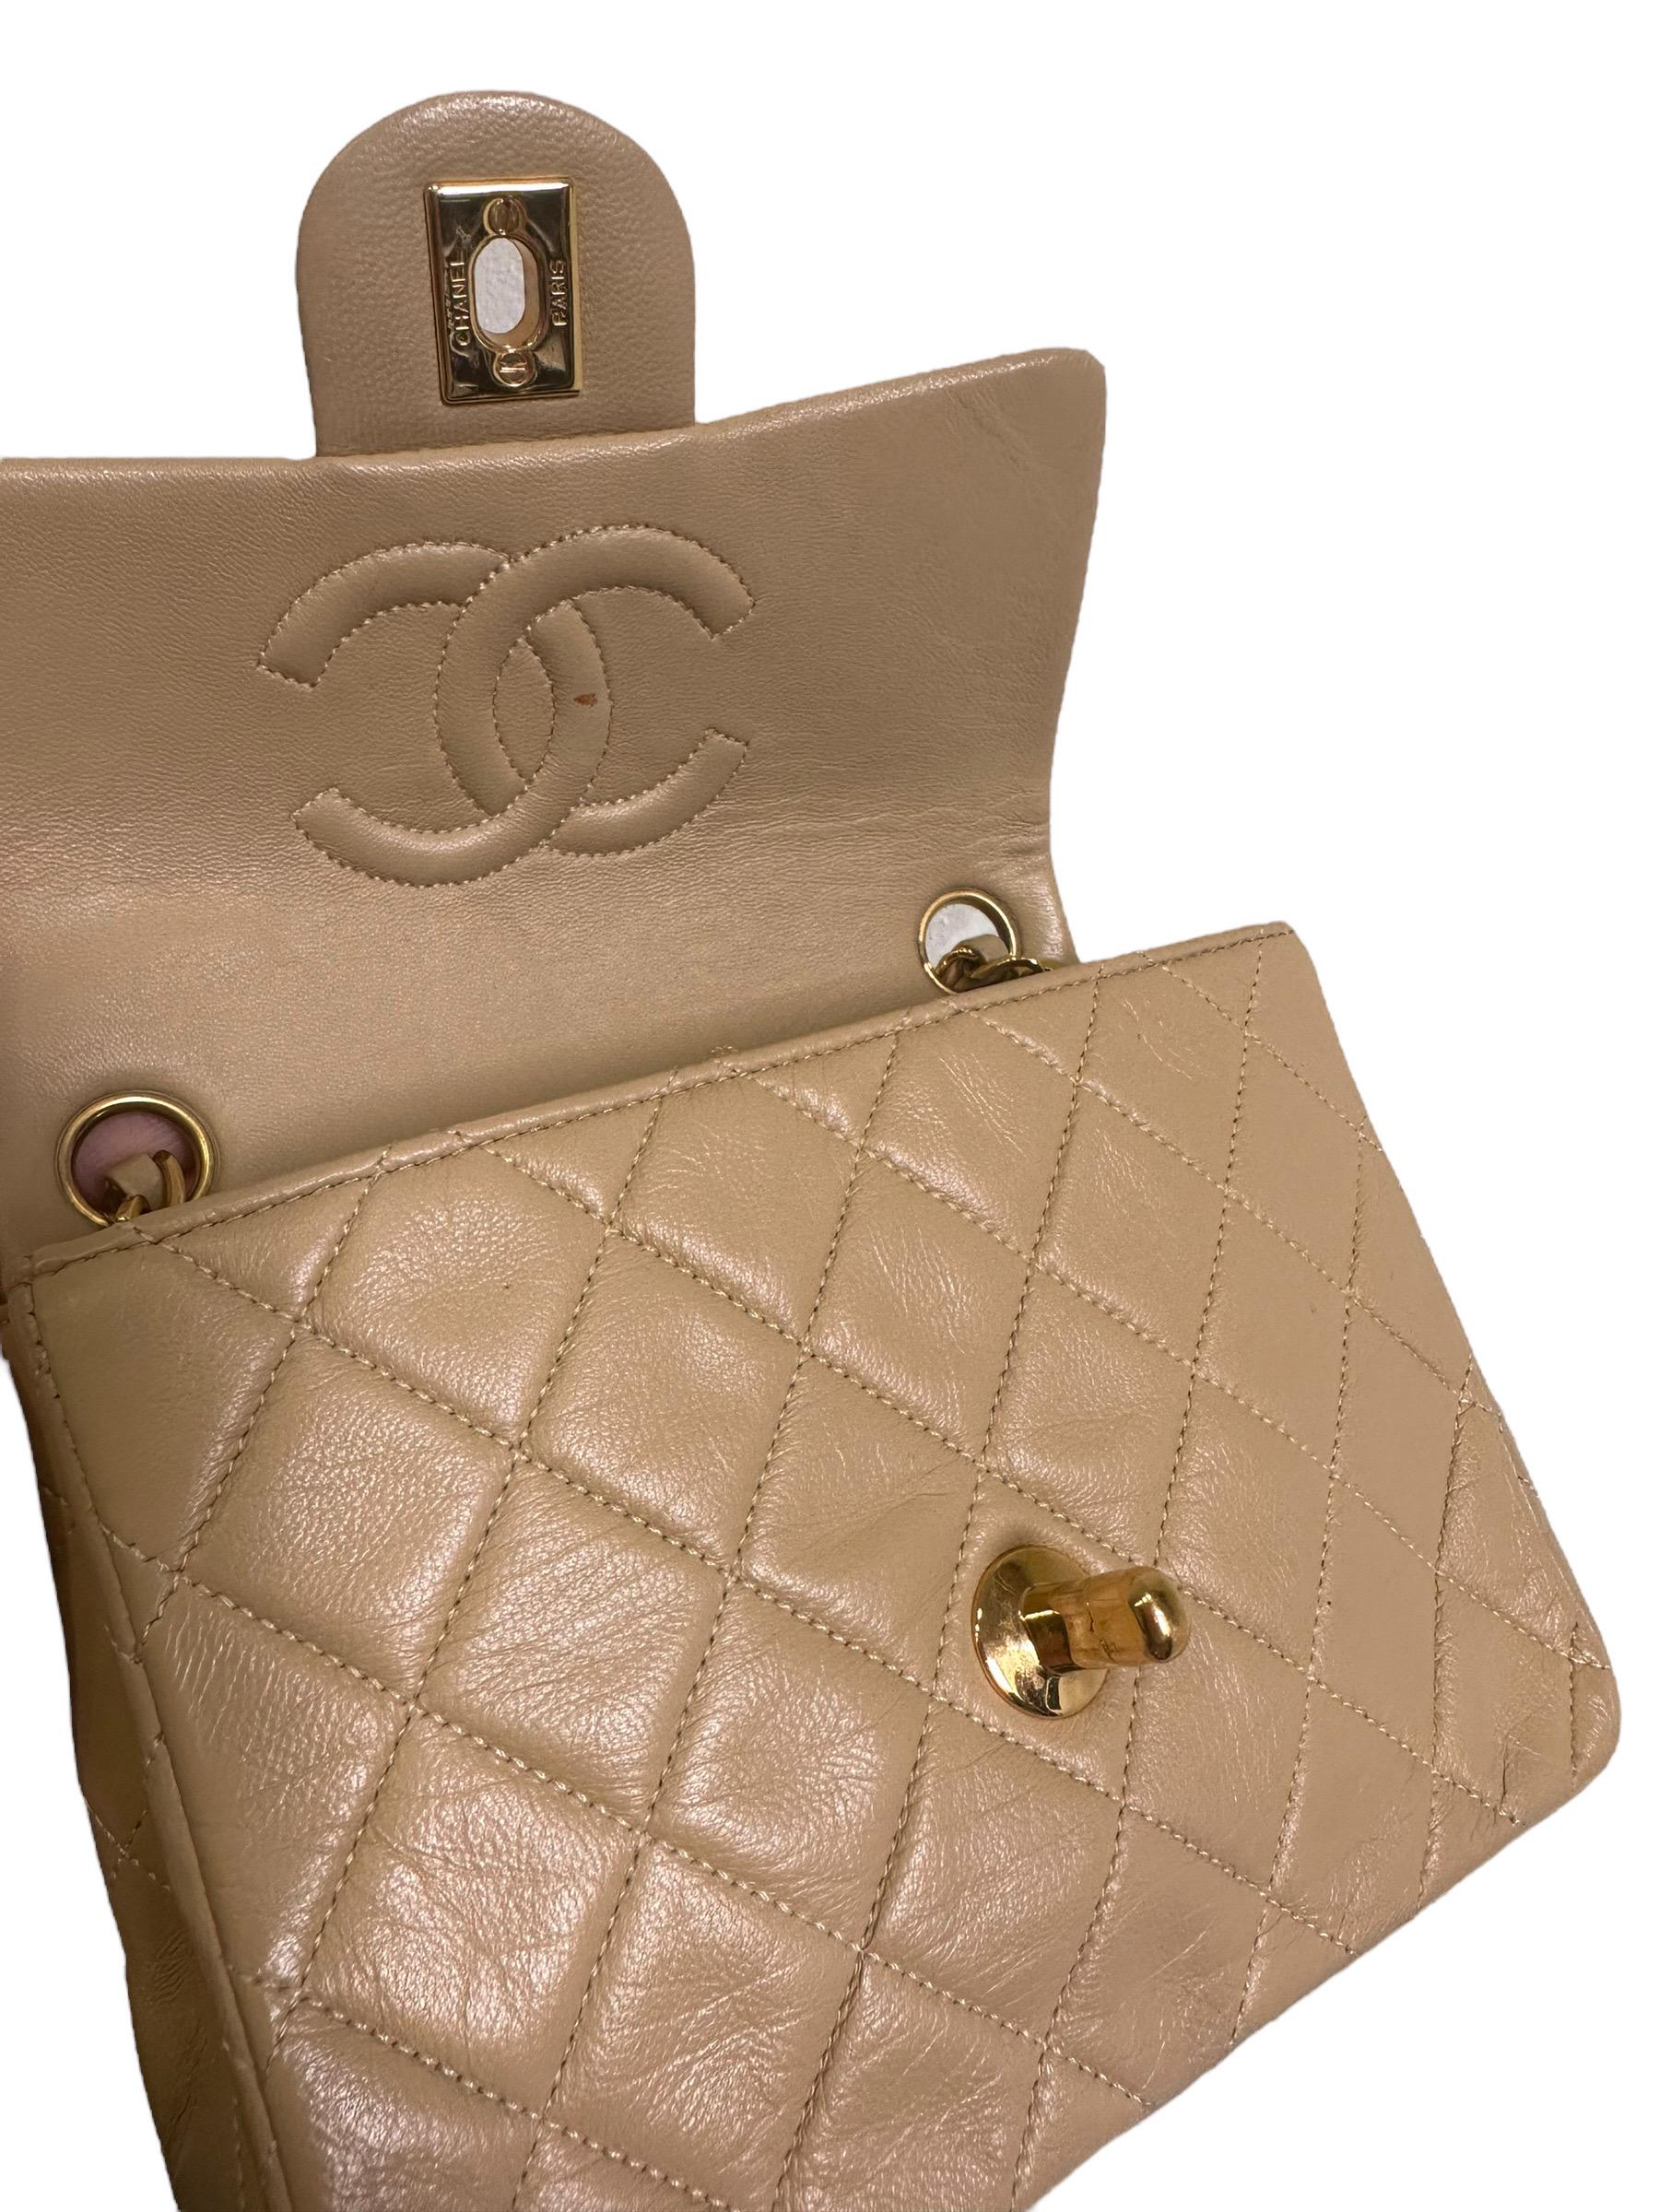 1990s Chanel Mini Flap Beige Leather Shoulder Bag For Sale 8